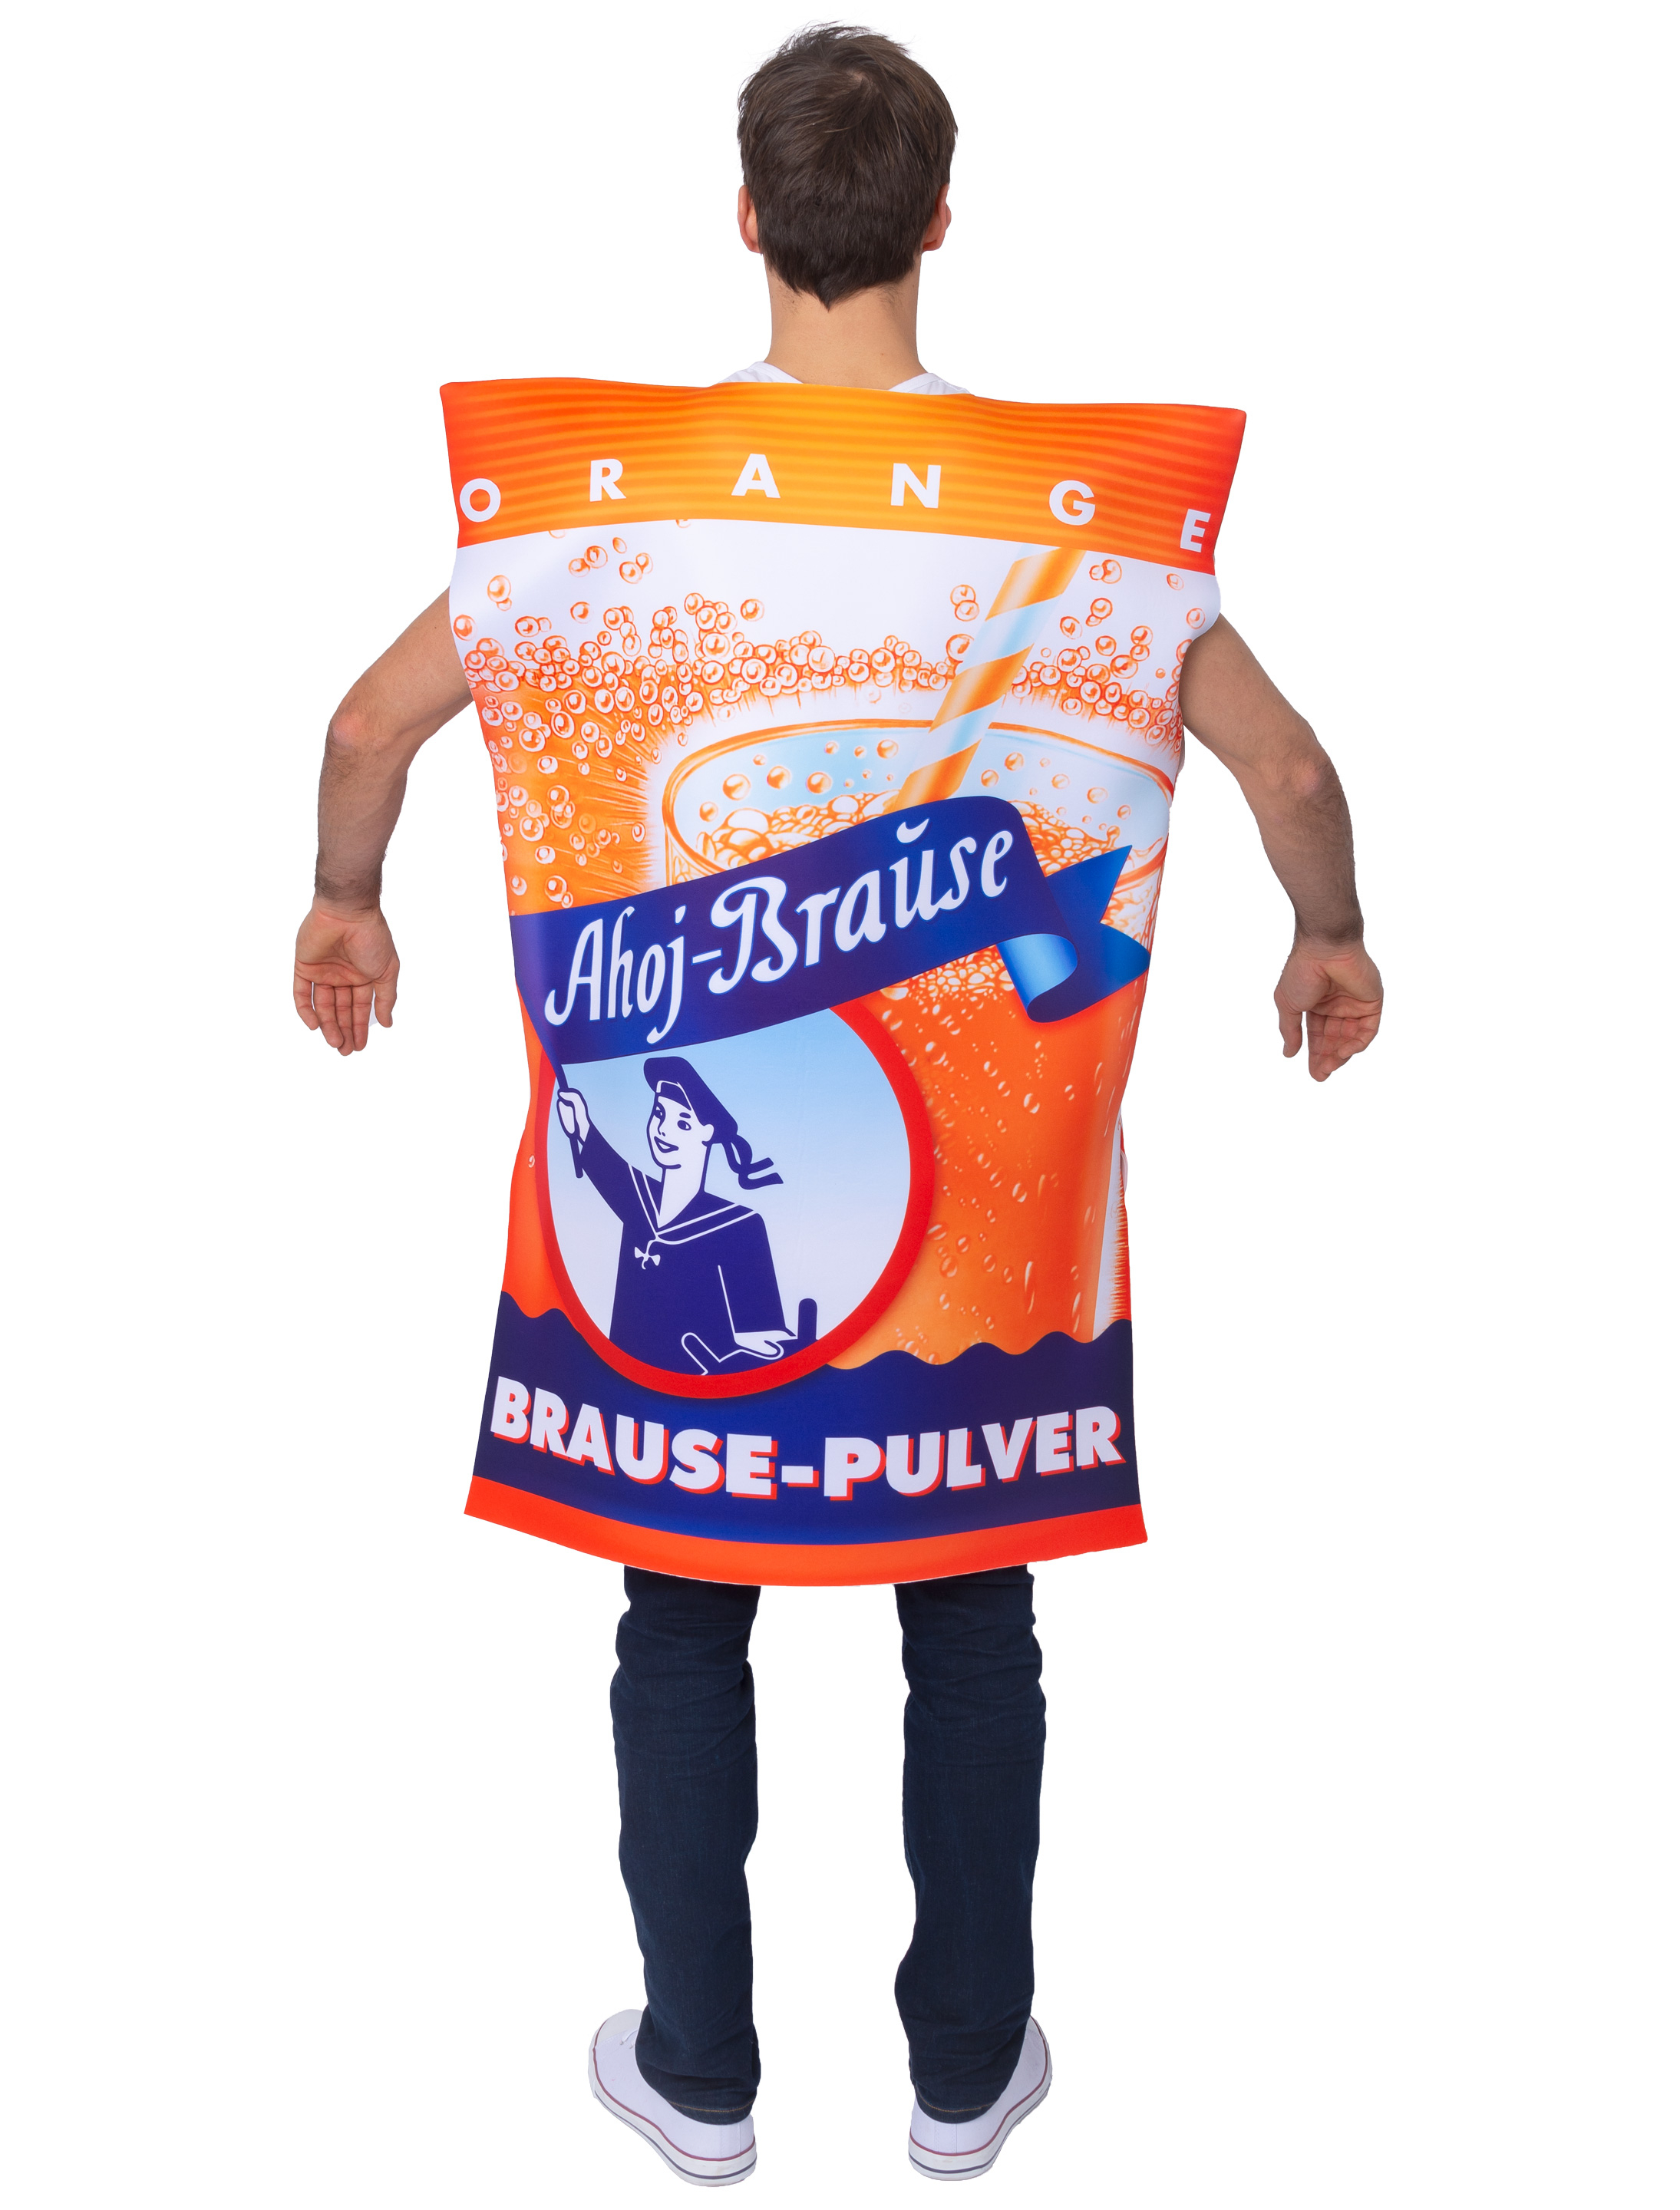 Kostüm Ahoj-Brause orange one size